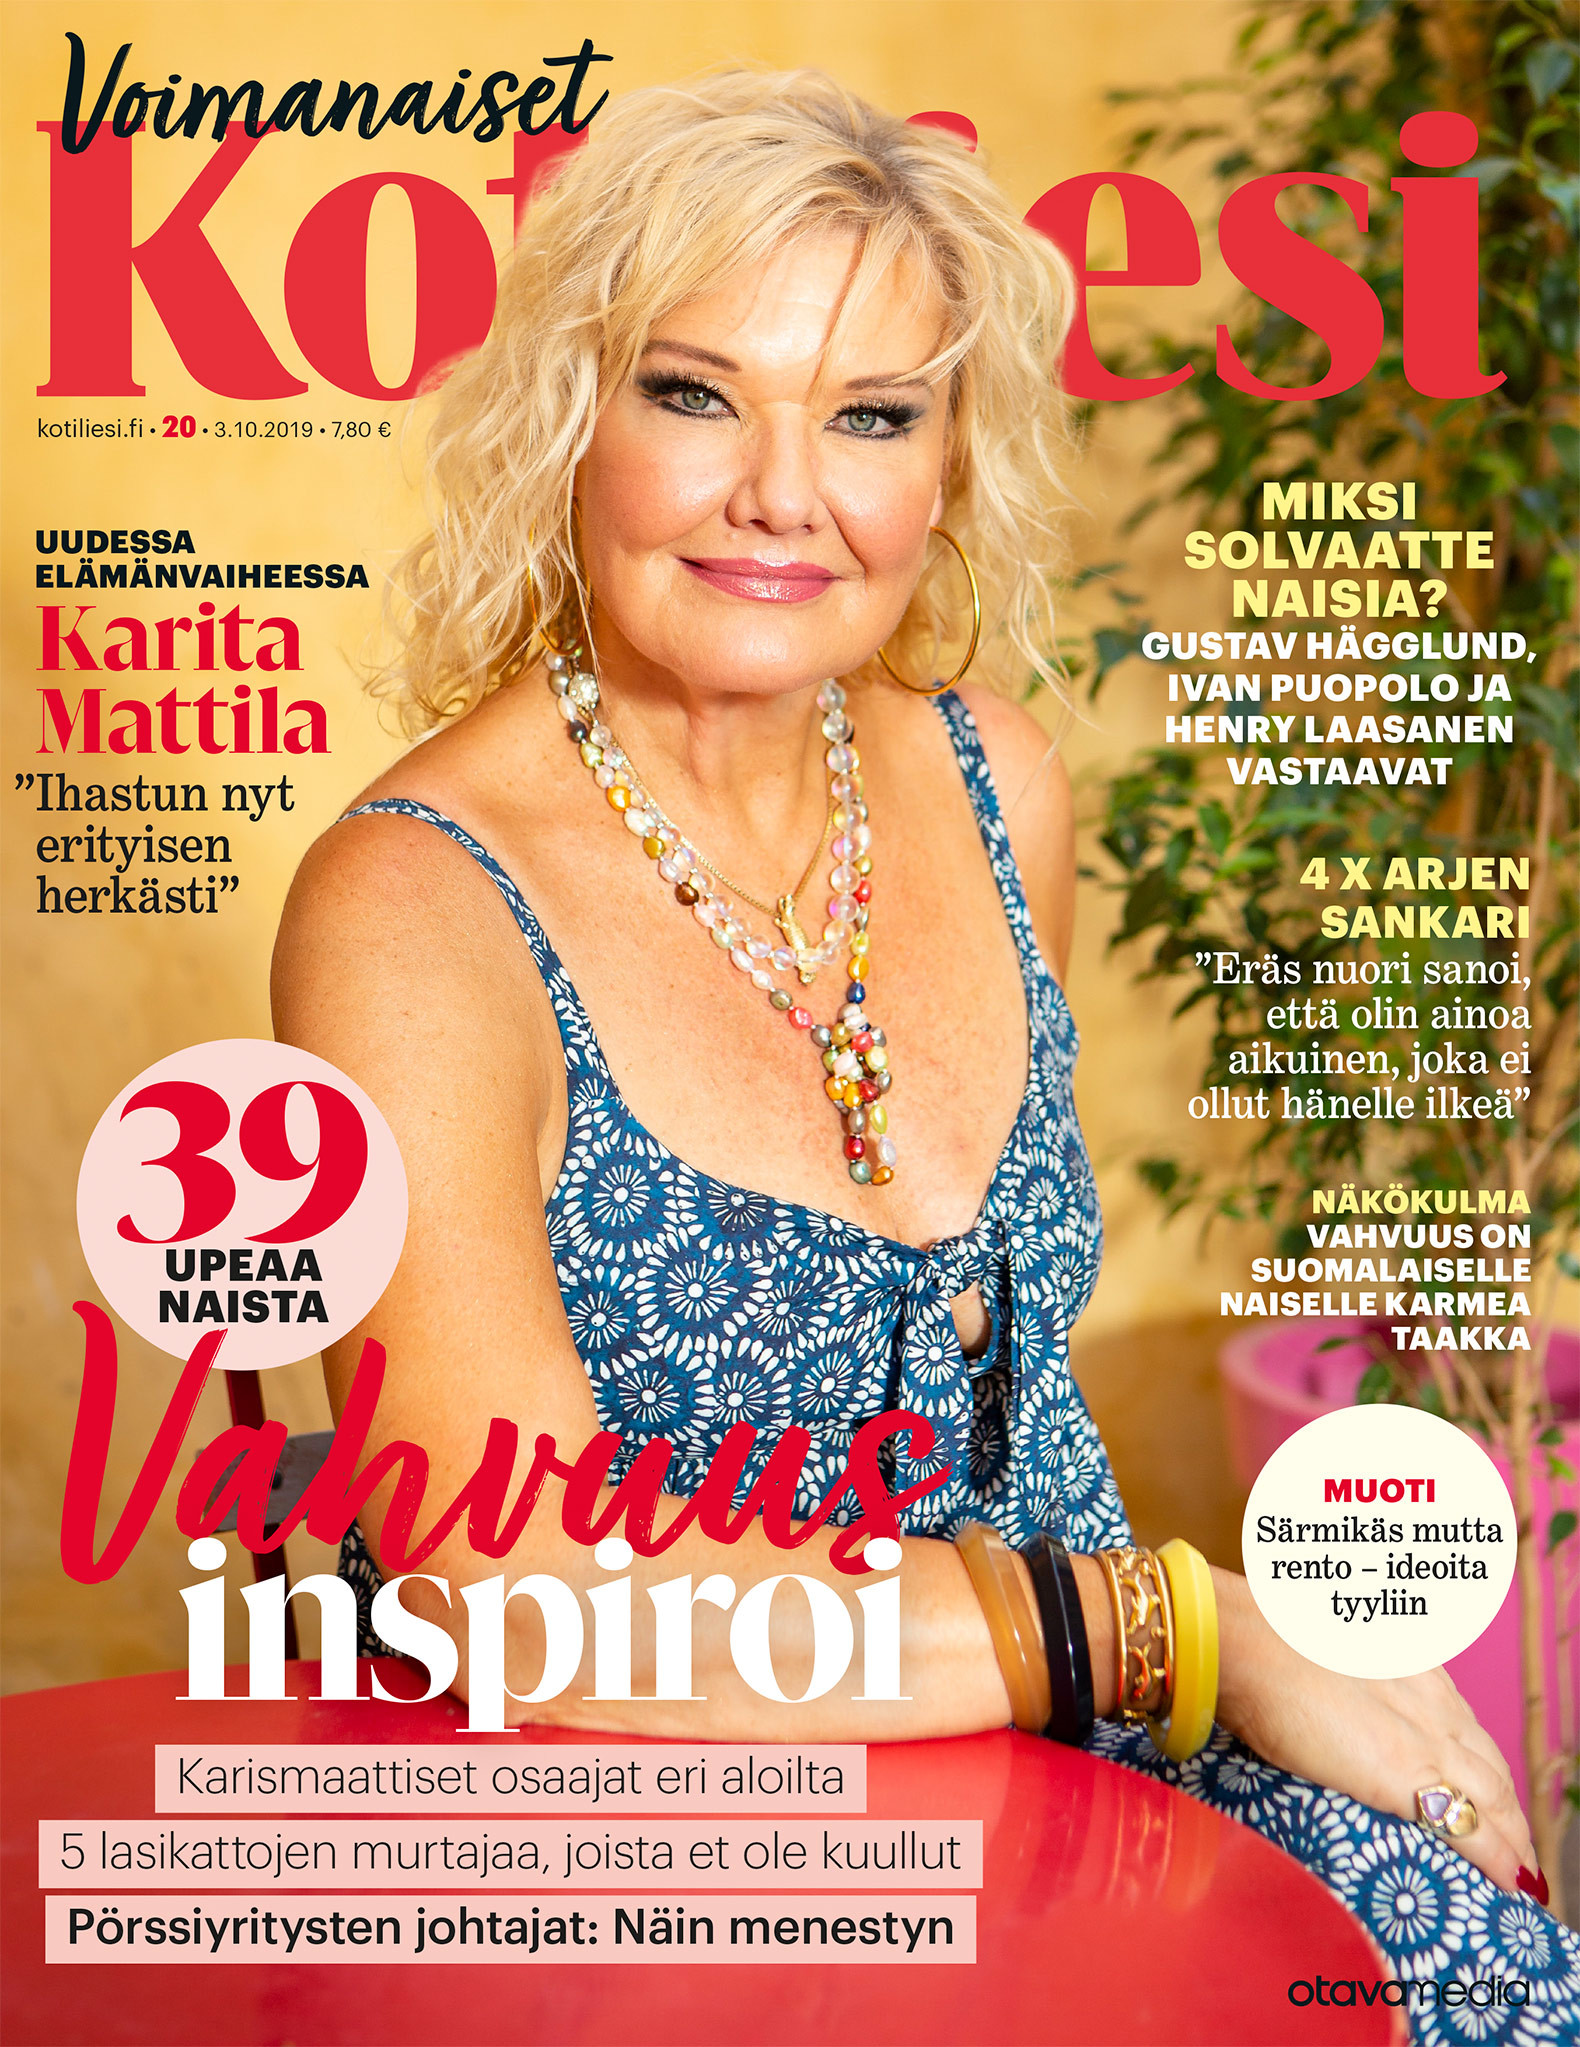 Page layout of cover of Kotiliesi, Finnish women's magazine, showing portrait of Karita Mattilia